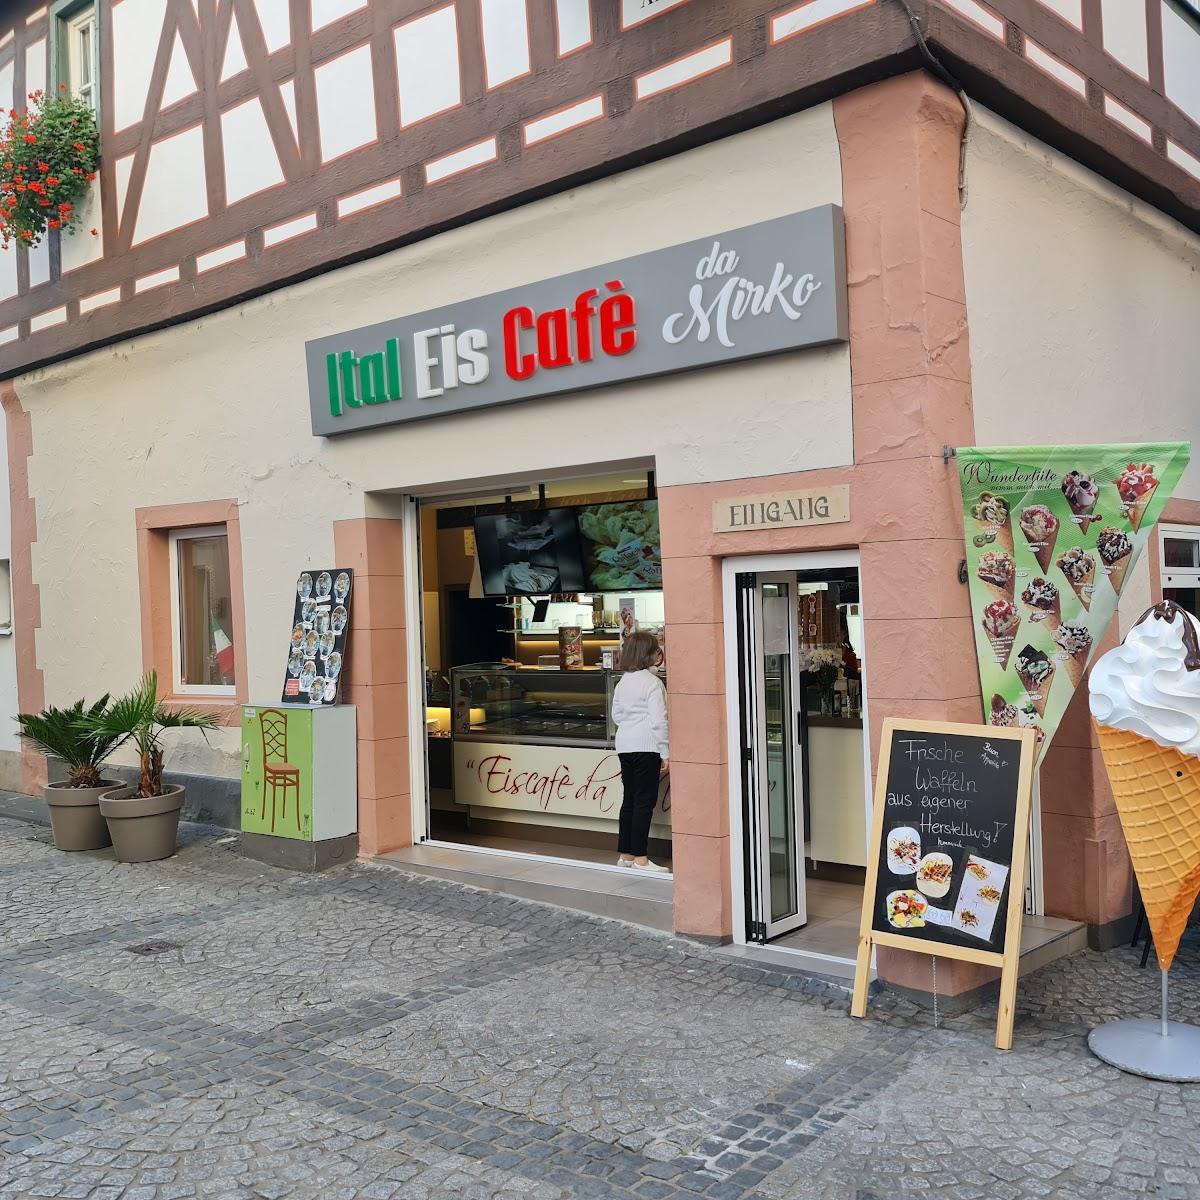 Restaurant "Eis Cafe da Mirko" in Boppard